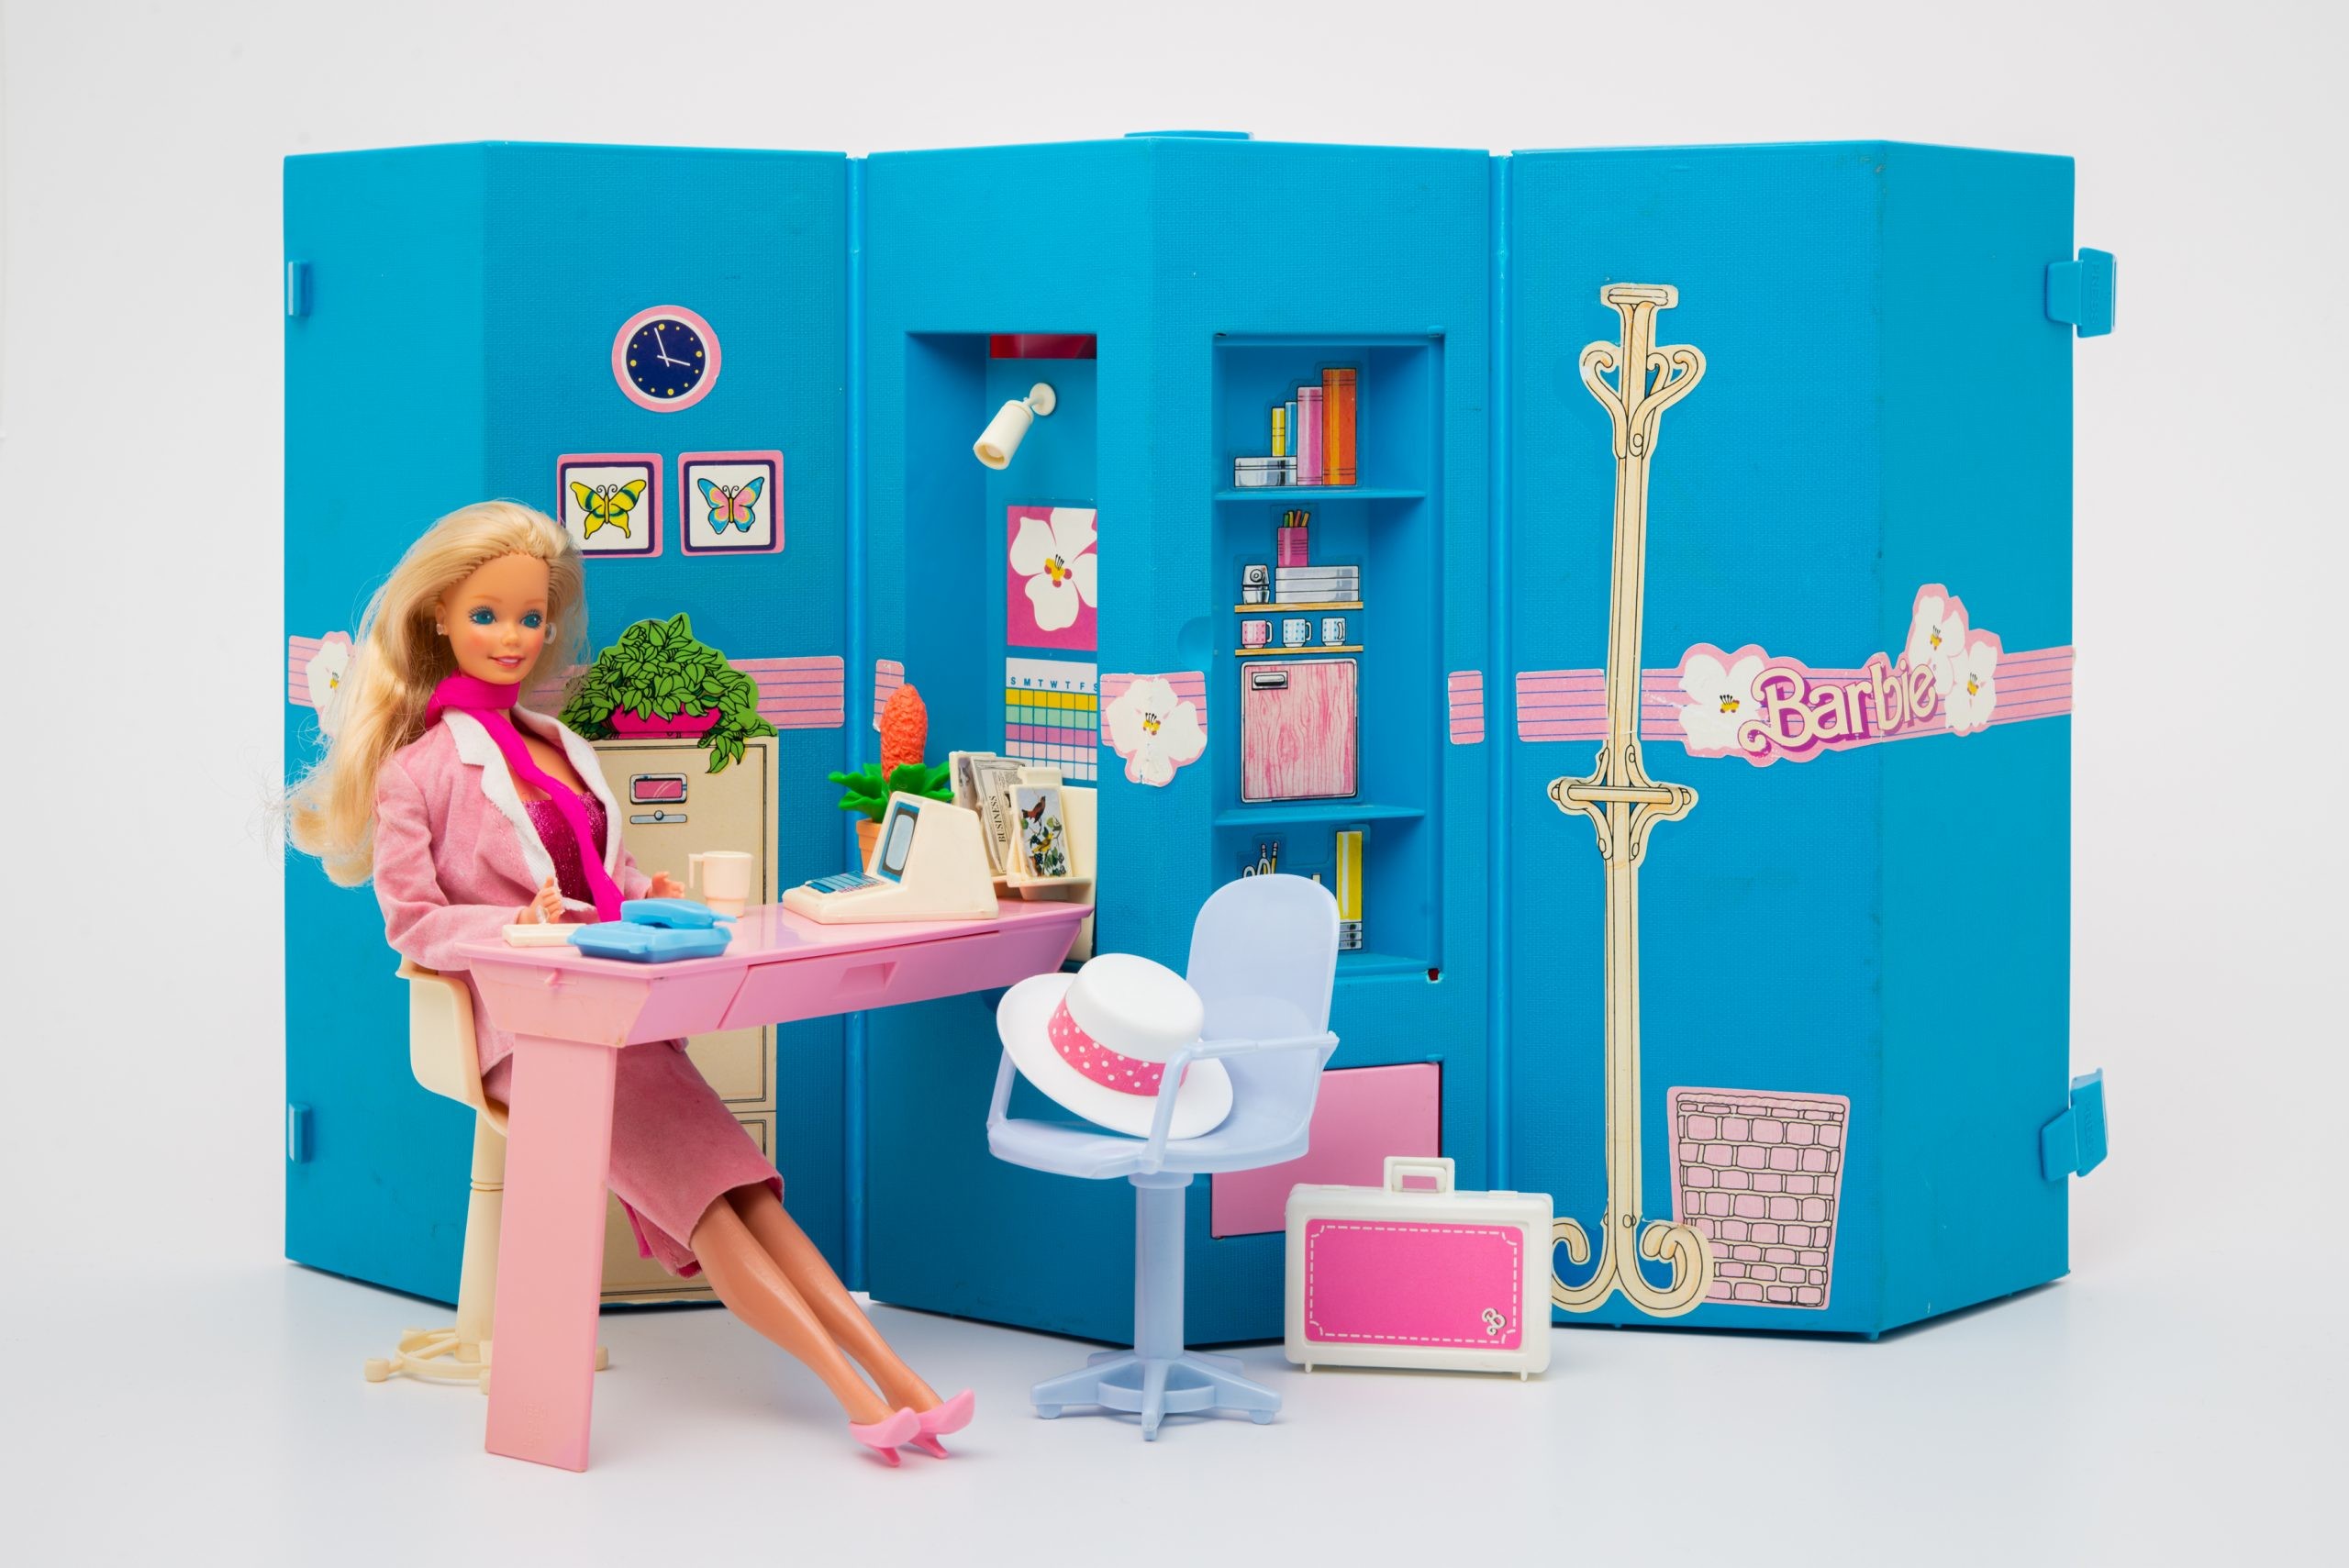 Barbie exhibition at Design Museum with Il Circolo London